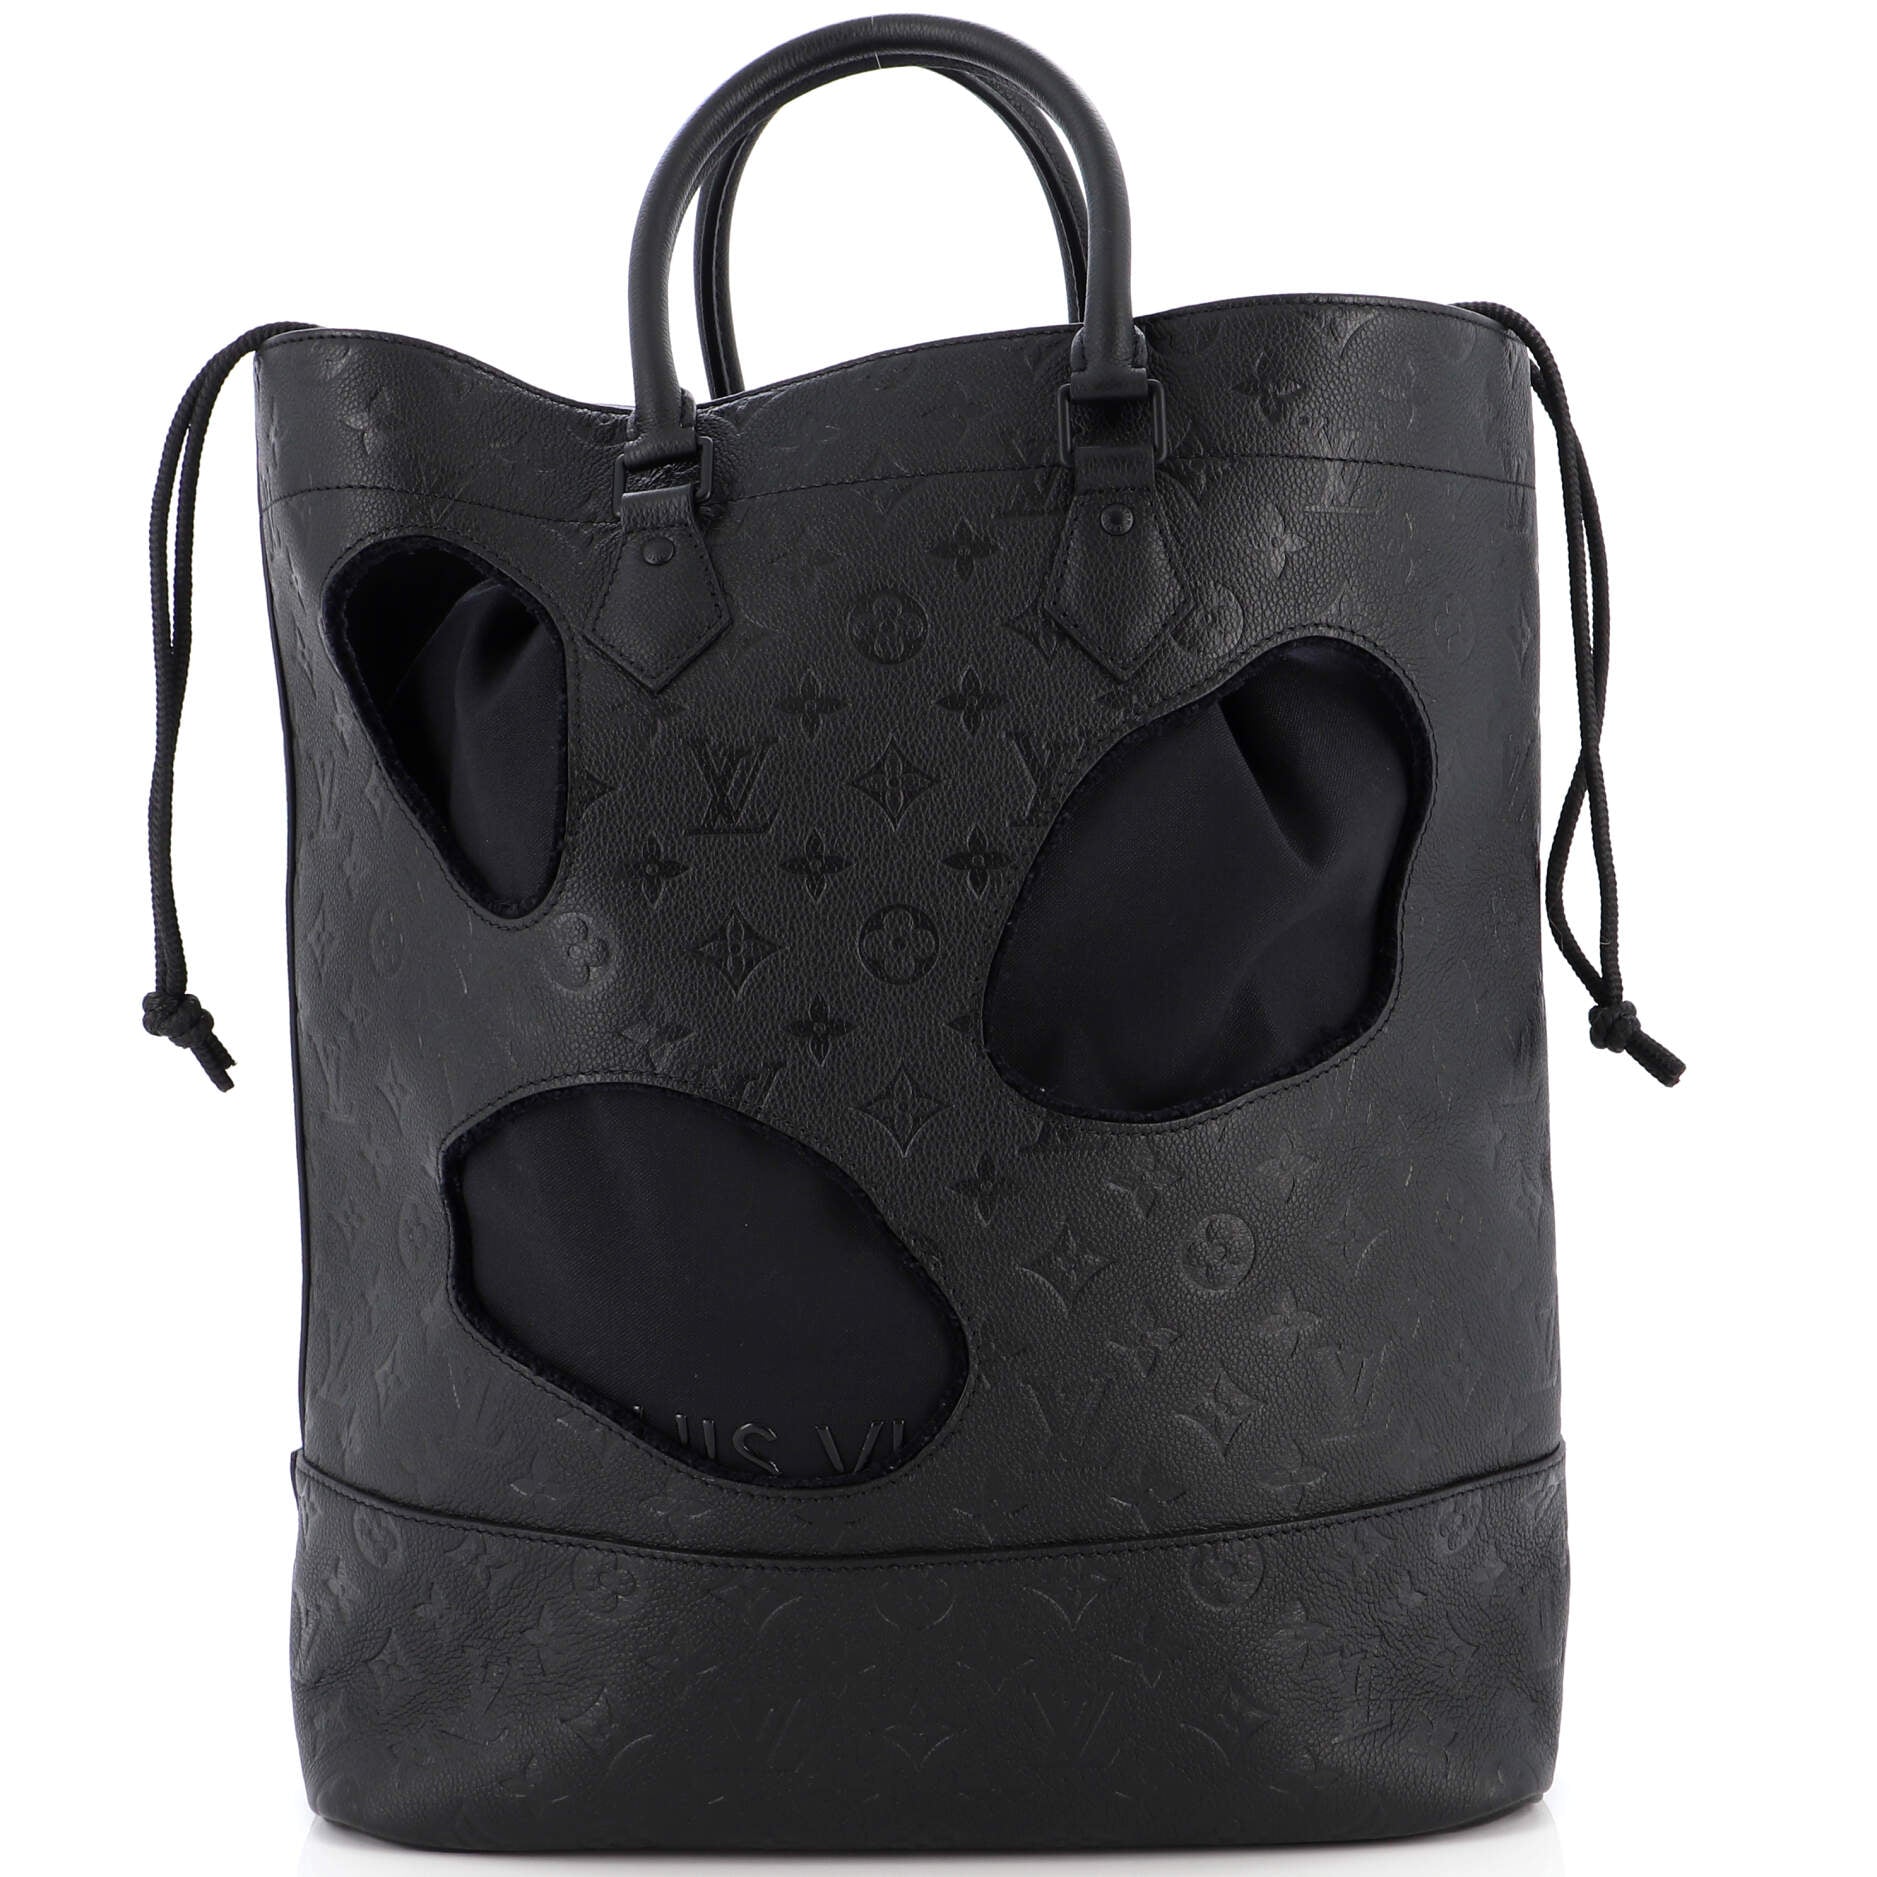 Louis Vuitton Black Monogram Empreinte Leather V MM Tote Bag